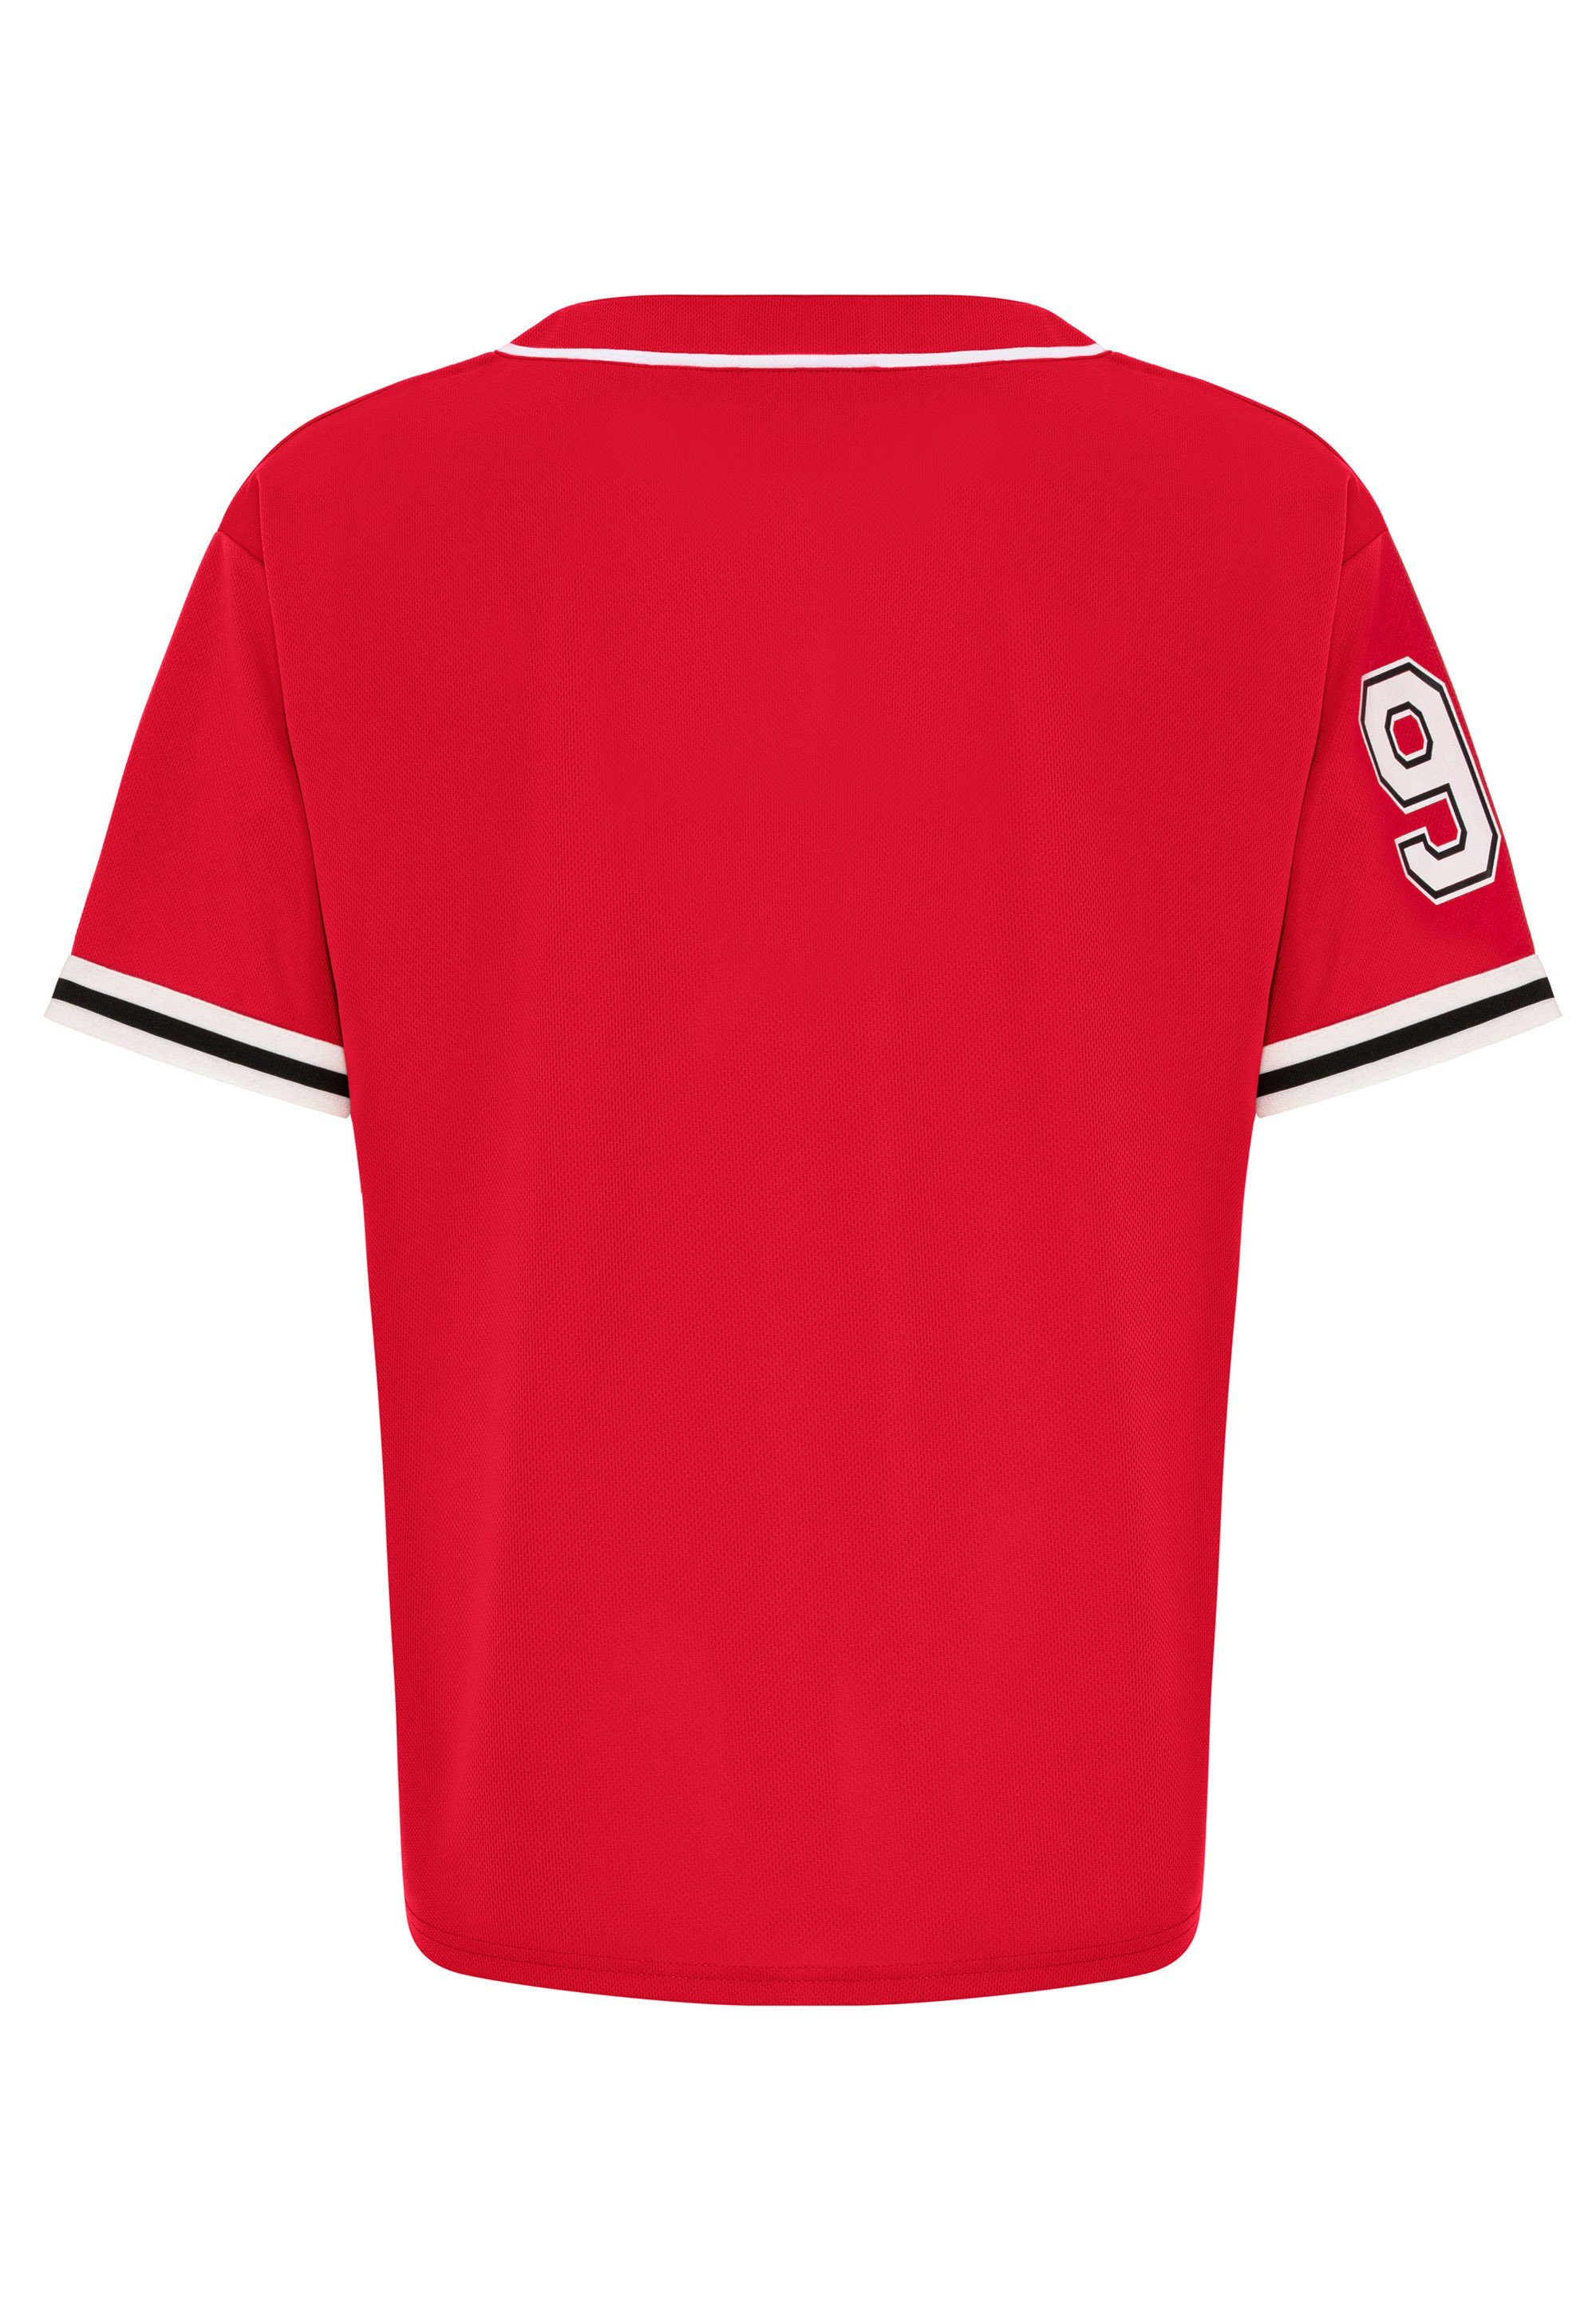 RedBridge T-Shirt mit lässigen Prints rot